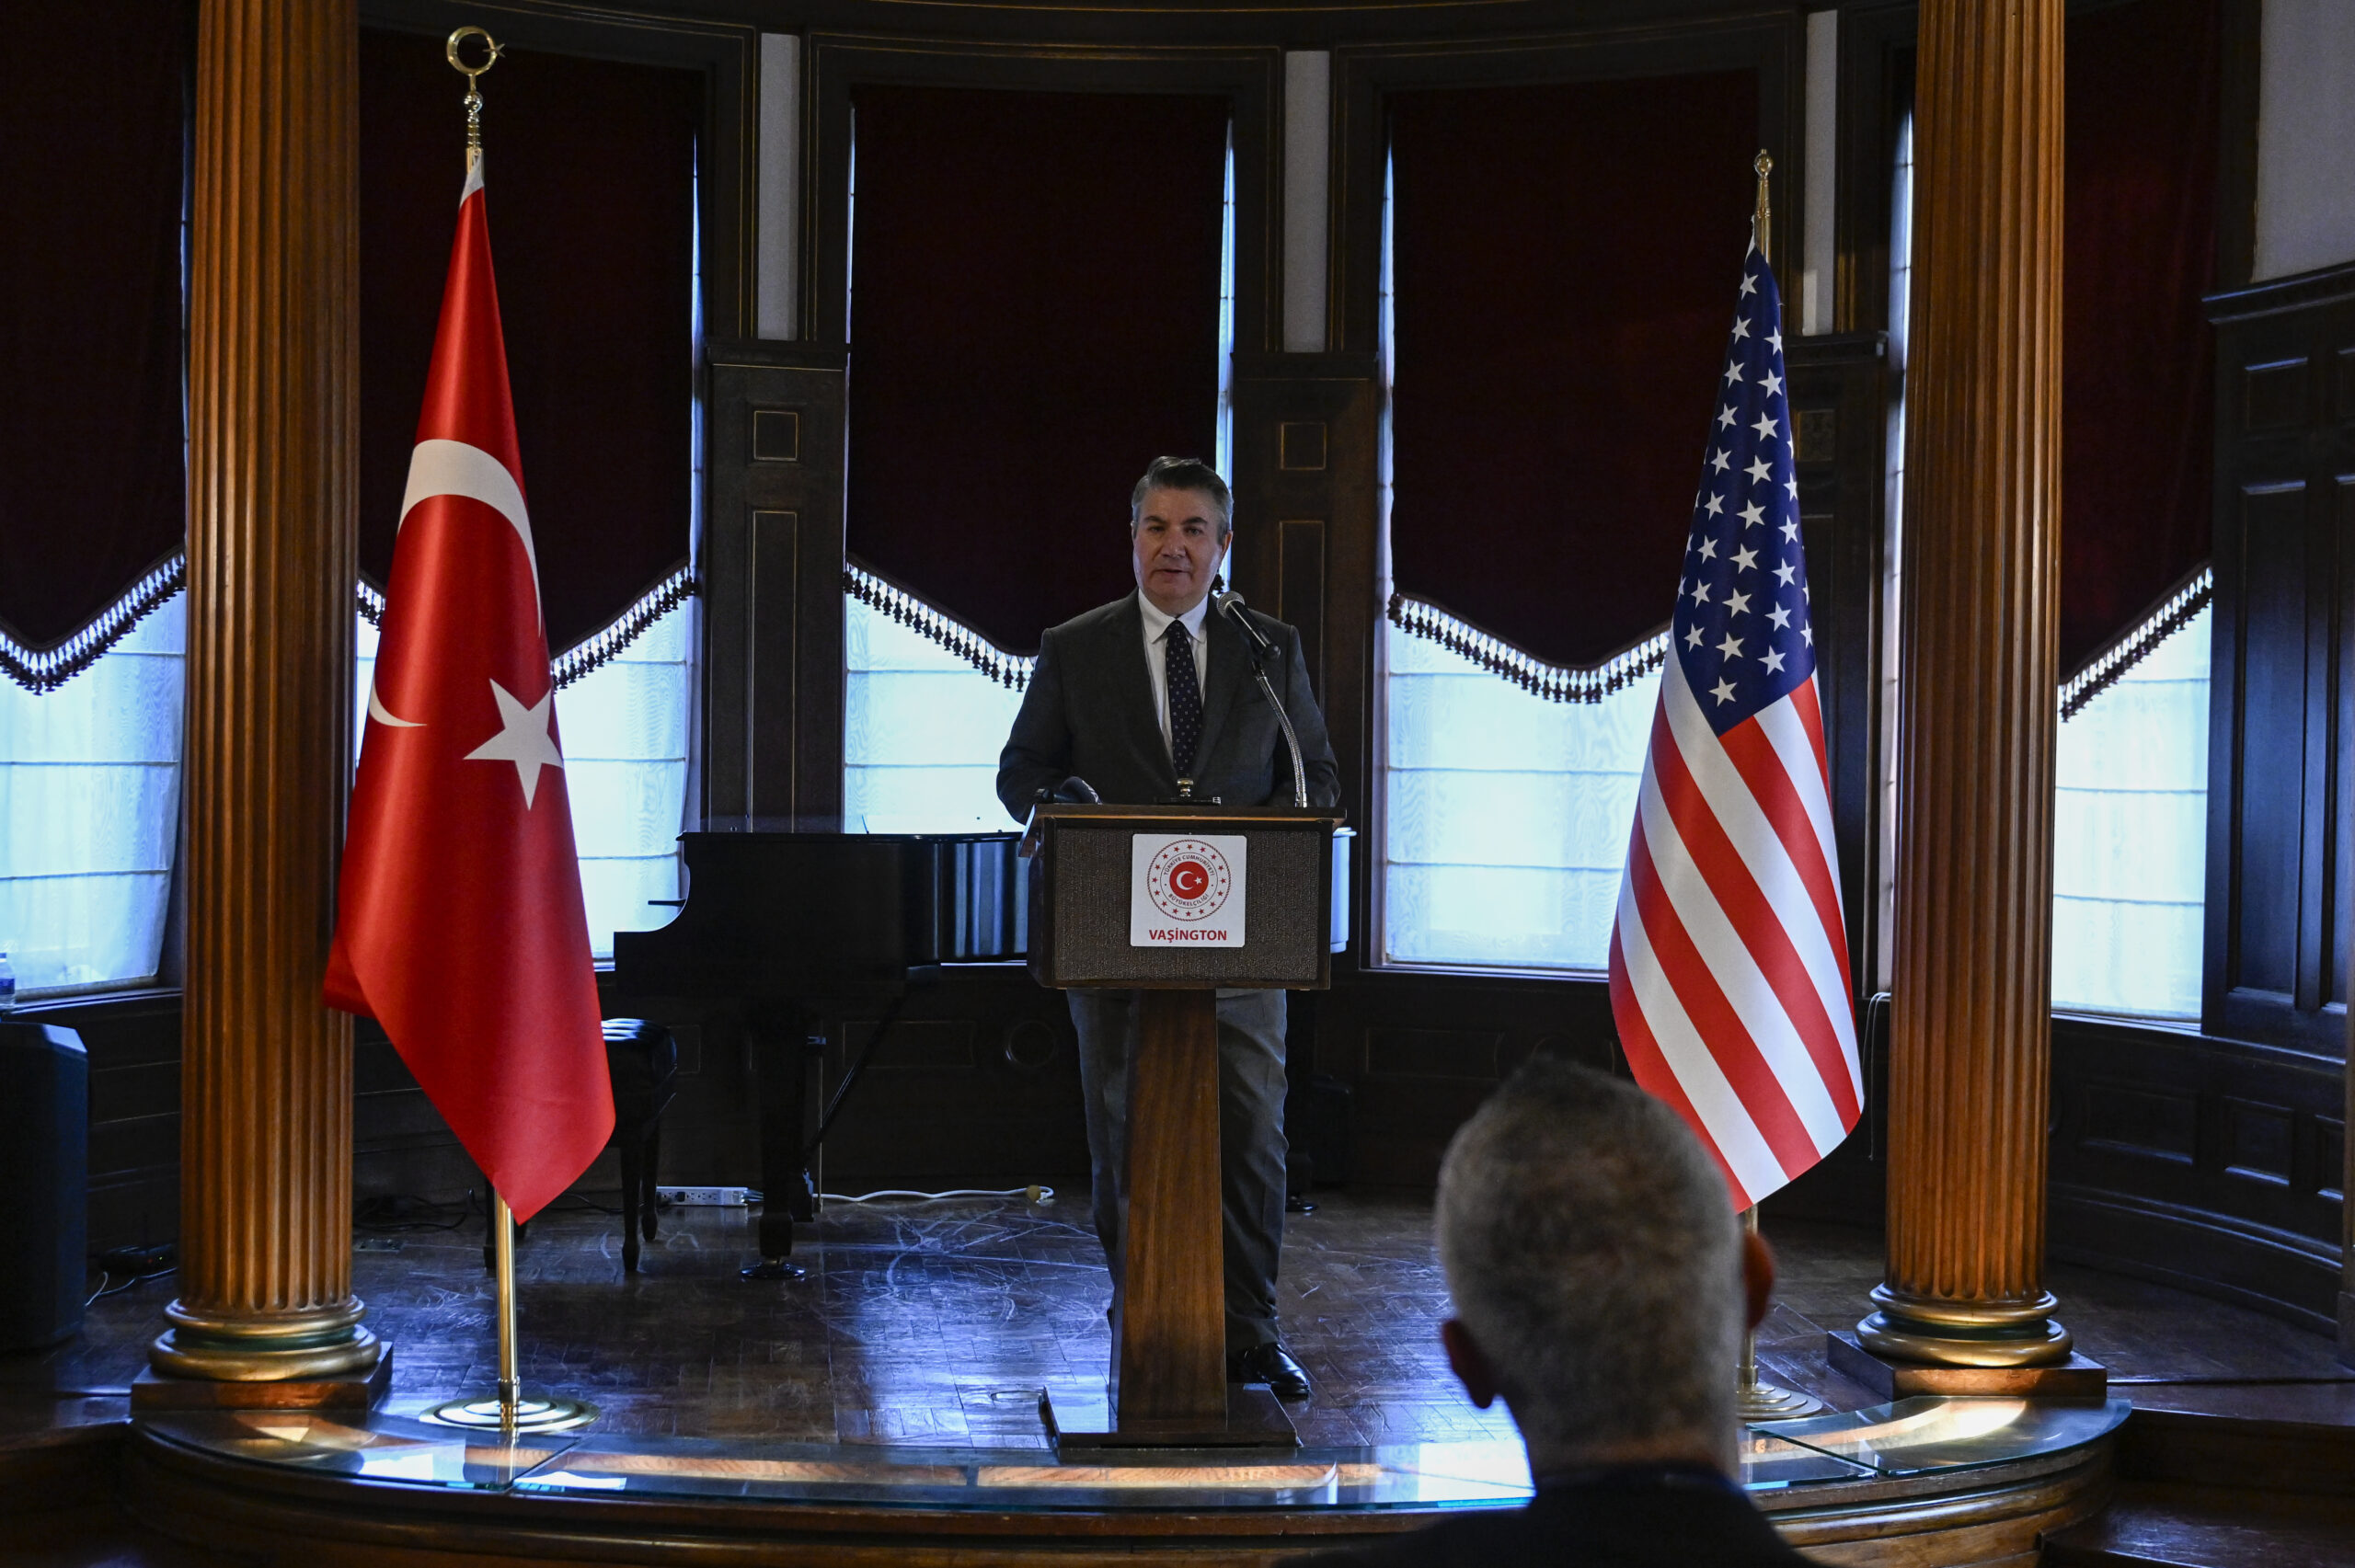 Türkiye's new ambassador to the US, Sedat Onal, presents credentials to President Biden